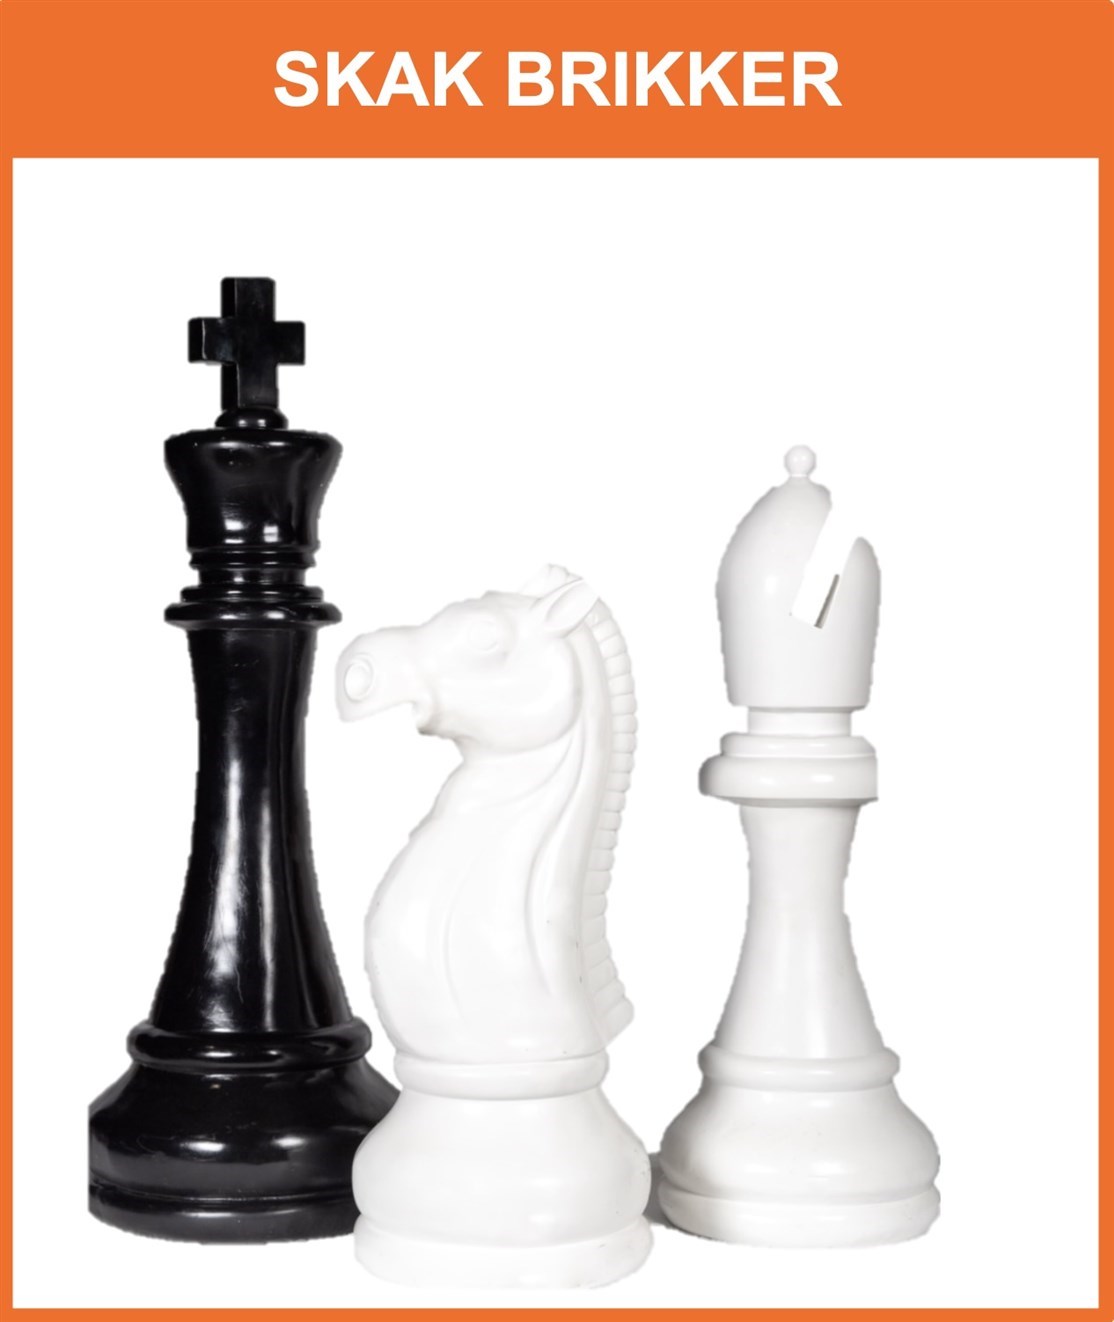 Lej kæmpe store skak brikker
*